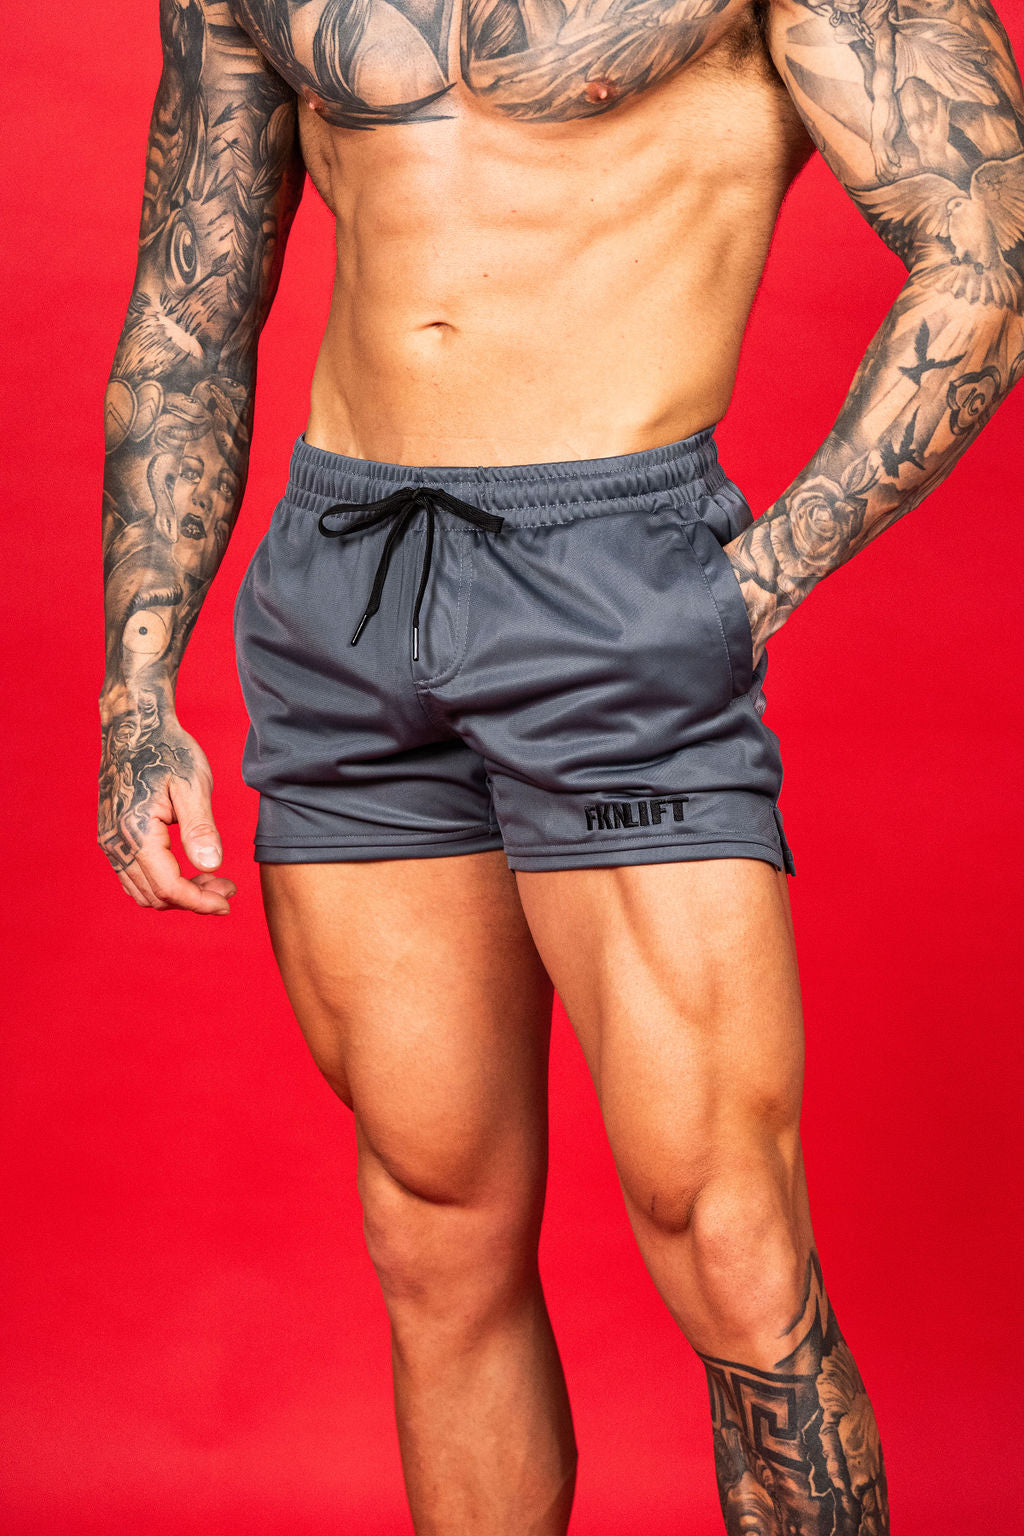 Men's Gym Shorts & Workout Shorts Australia